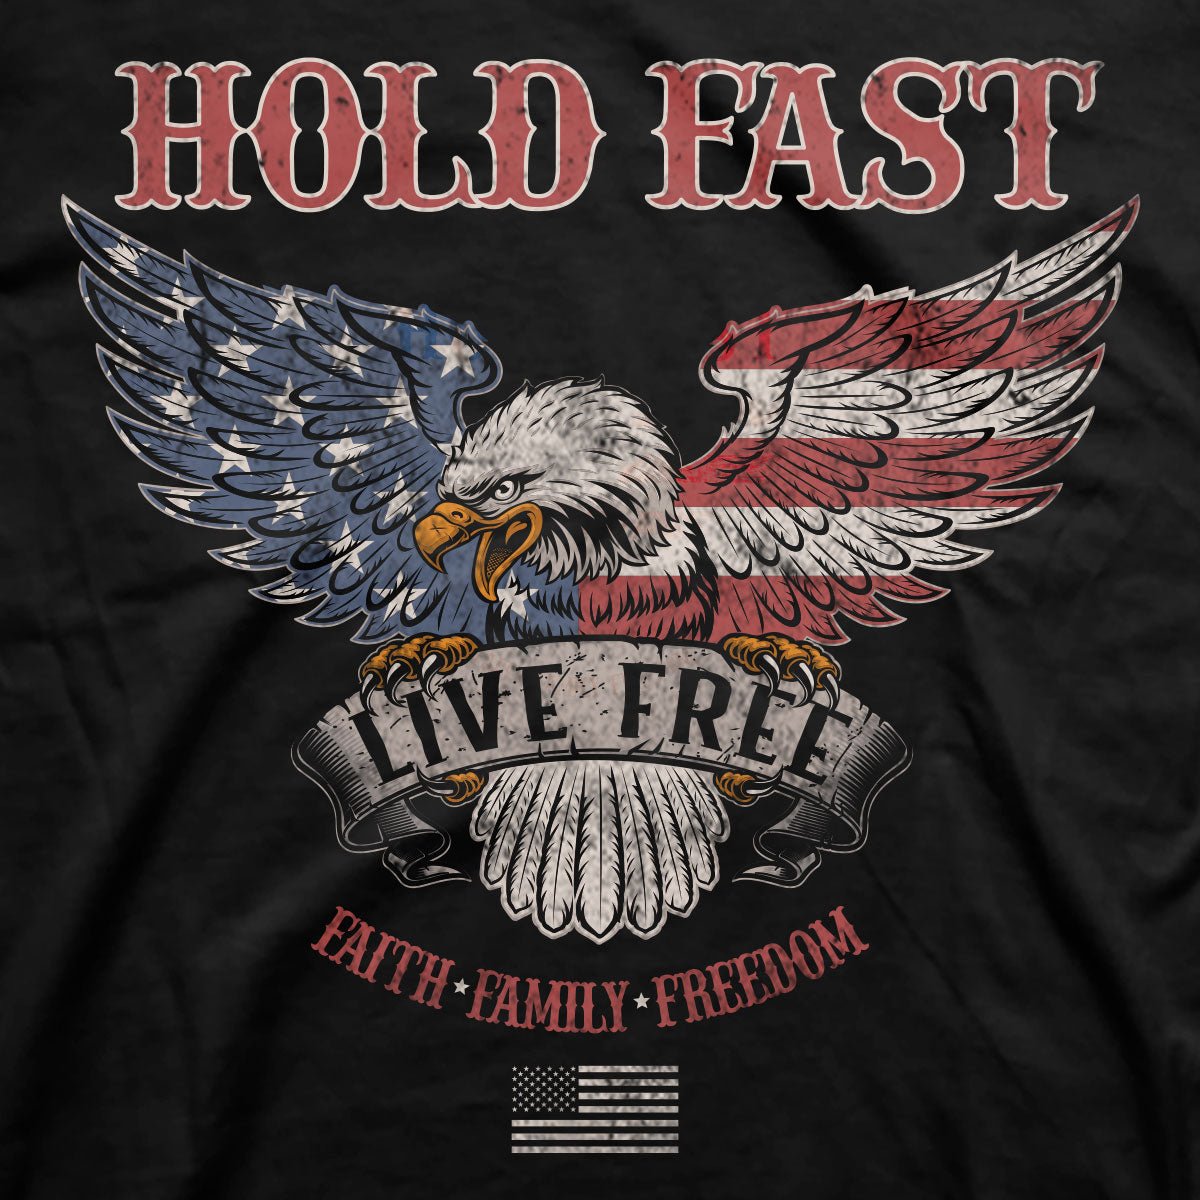 Live Free Mens T-Shirt